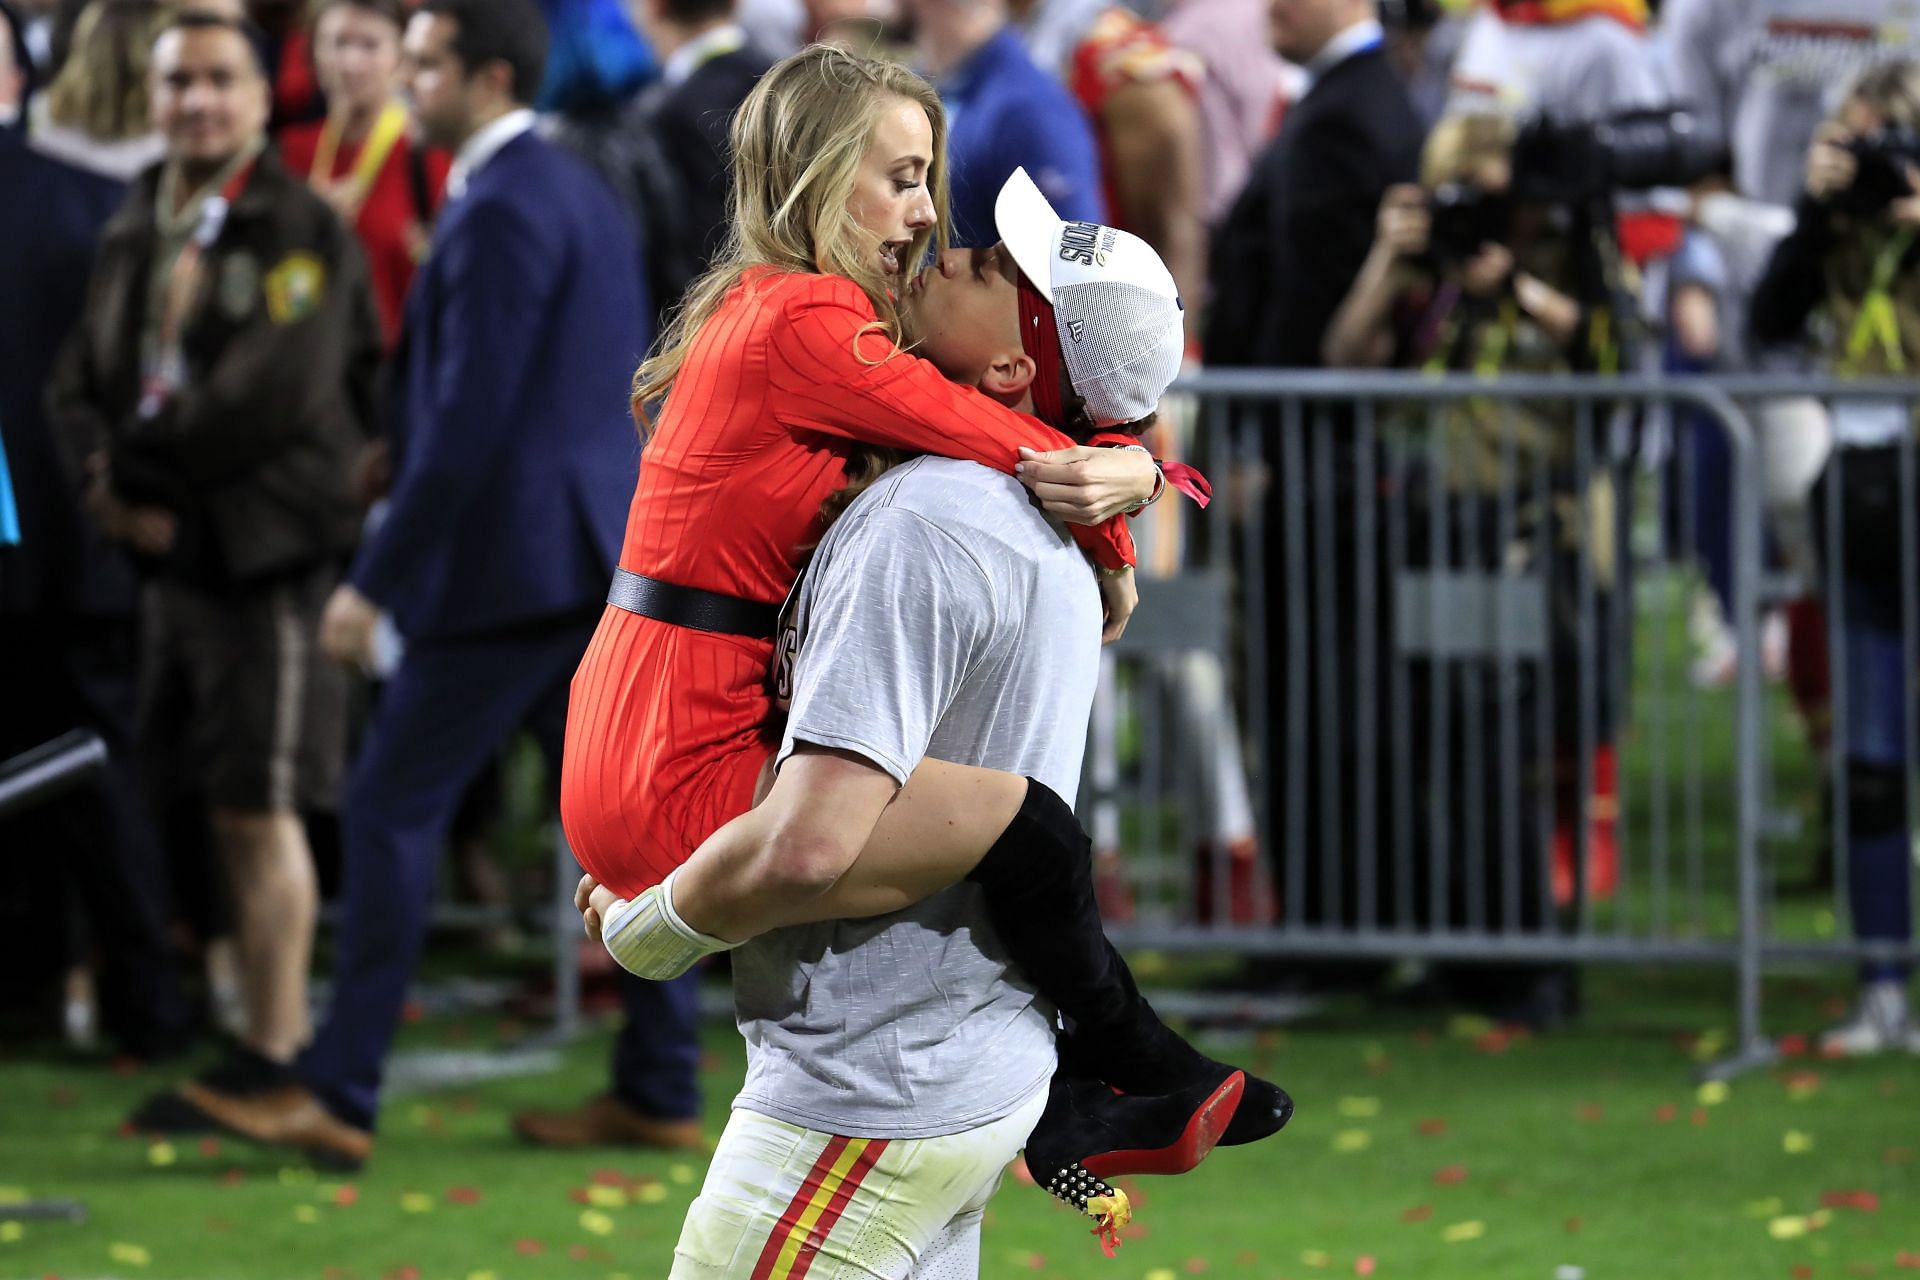 The couple after the Chiefs won Super Bowl LIV